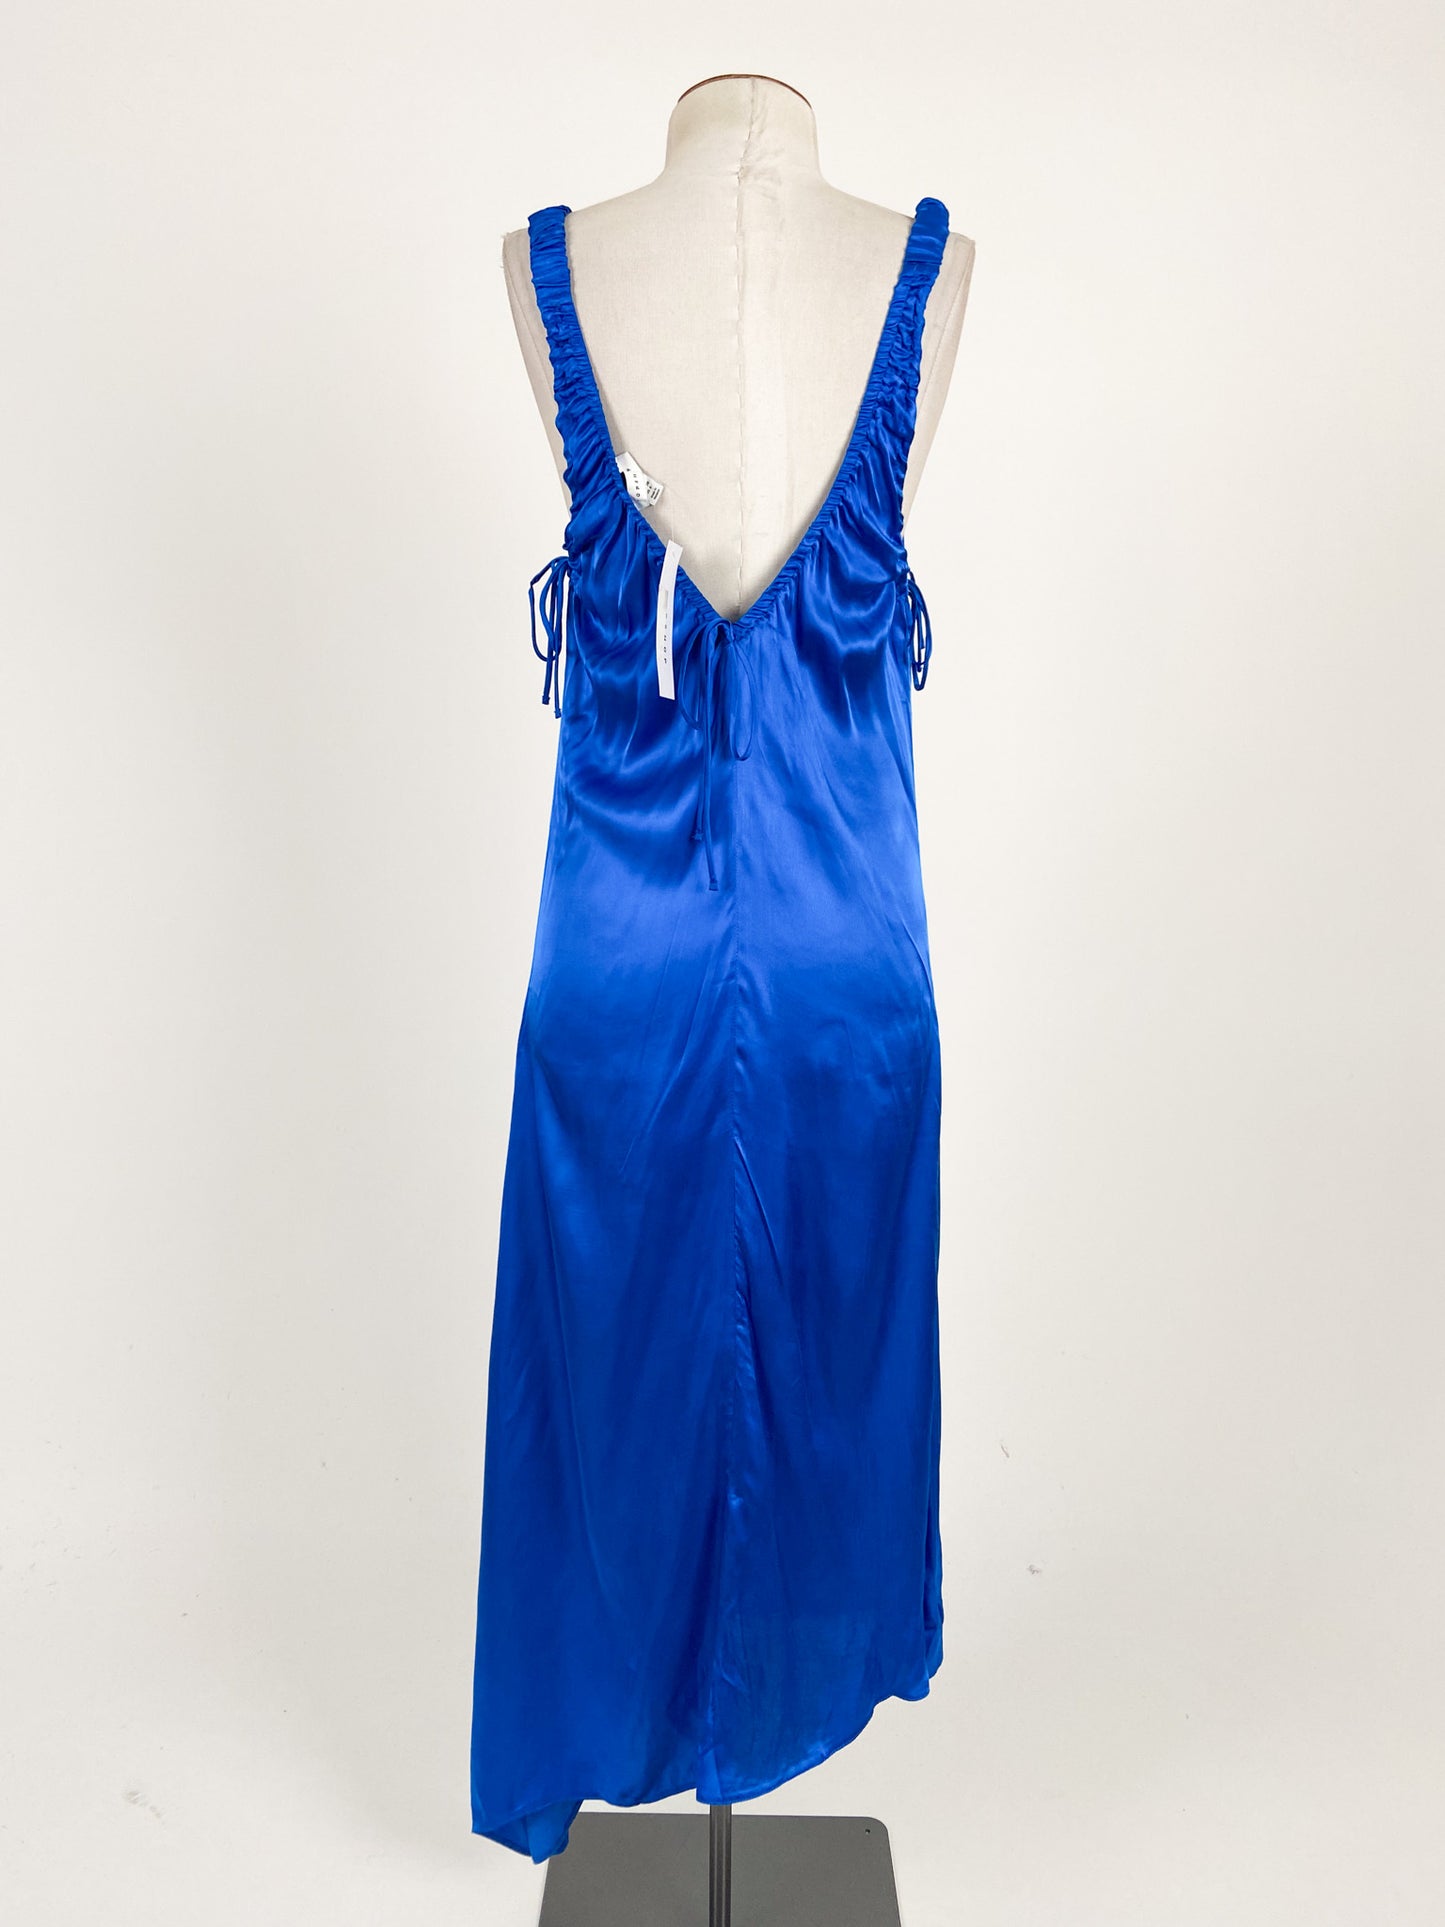 Topshop | Blue Casual/Cocktail Dress | Size 10